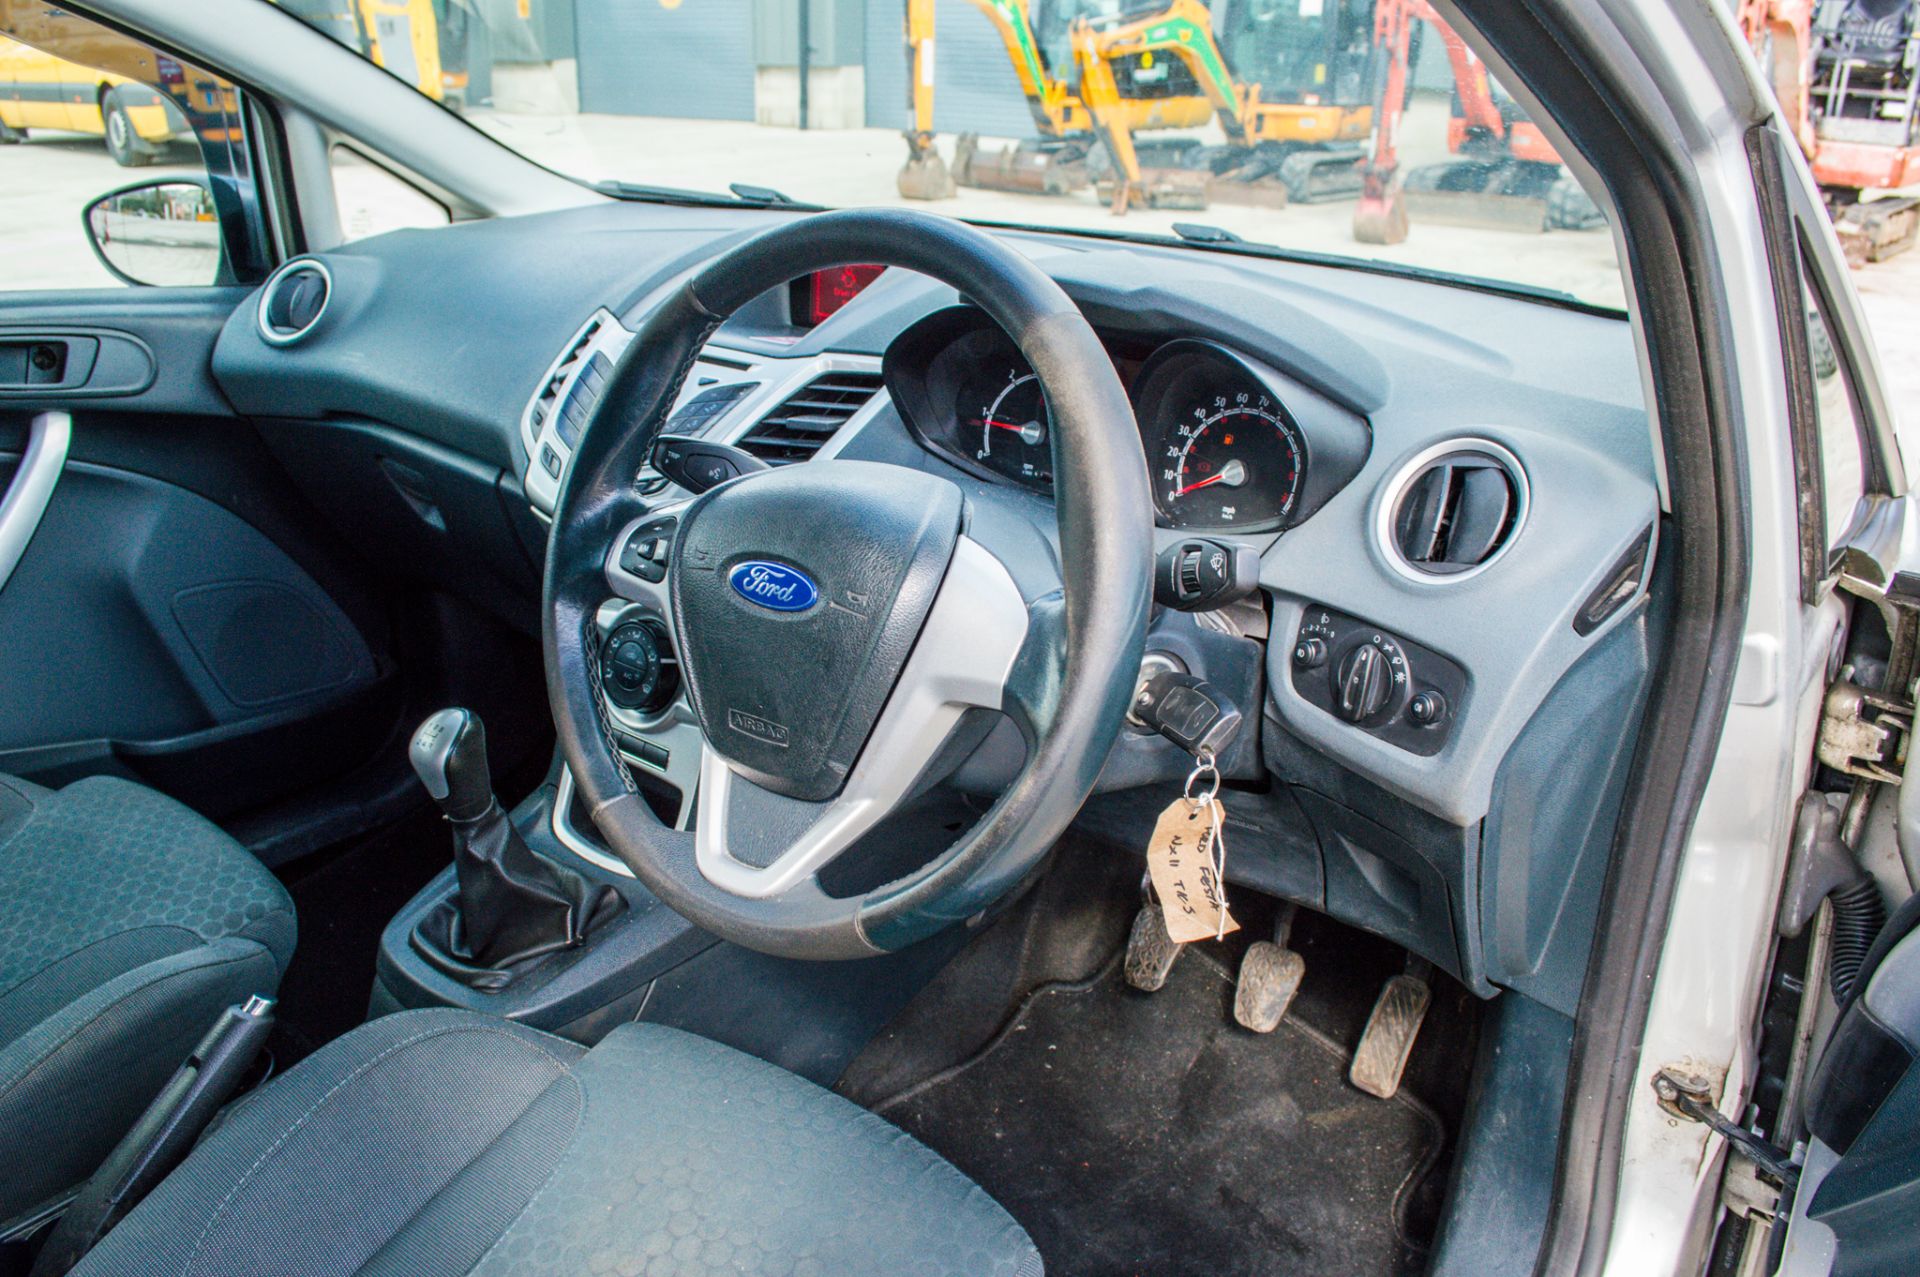 Ford Fiesta 1.6 TDCI 95 Sport car derived van (No VAT) - Image 22 of 28